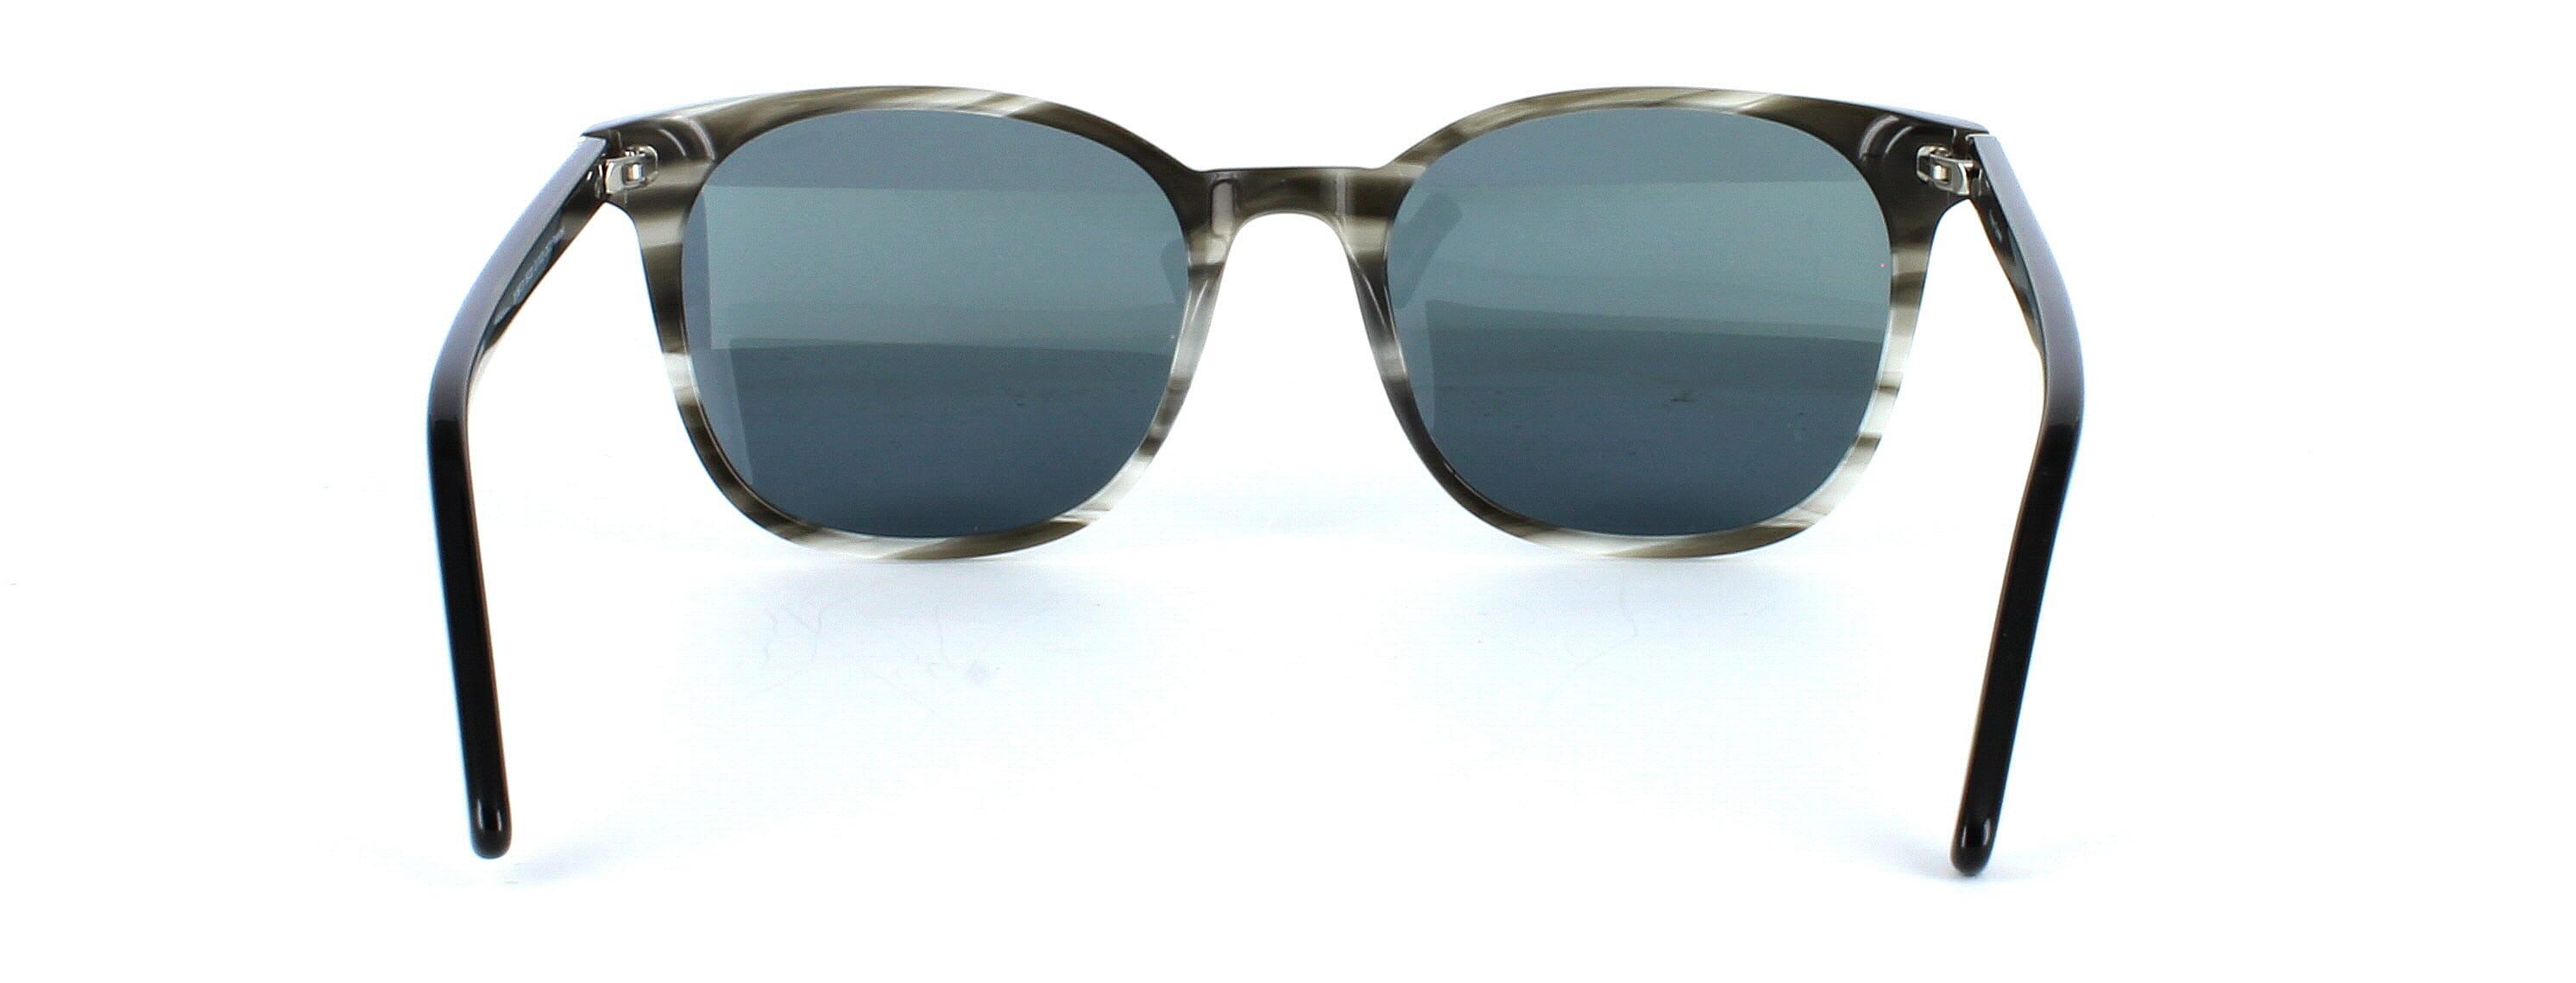 Aurelia - acetate prescription sunglasses for women - round shaped lenses - image view 4